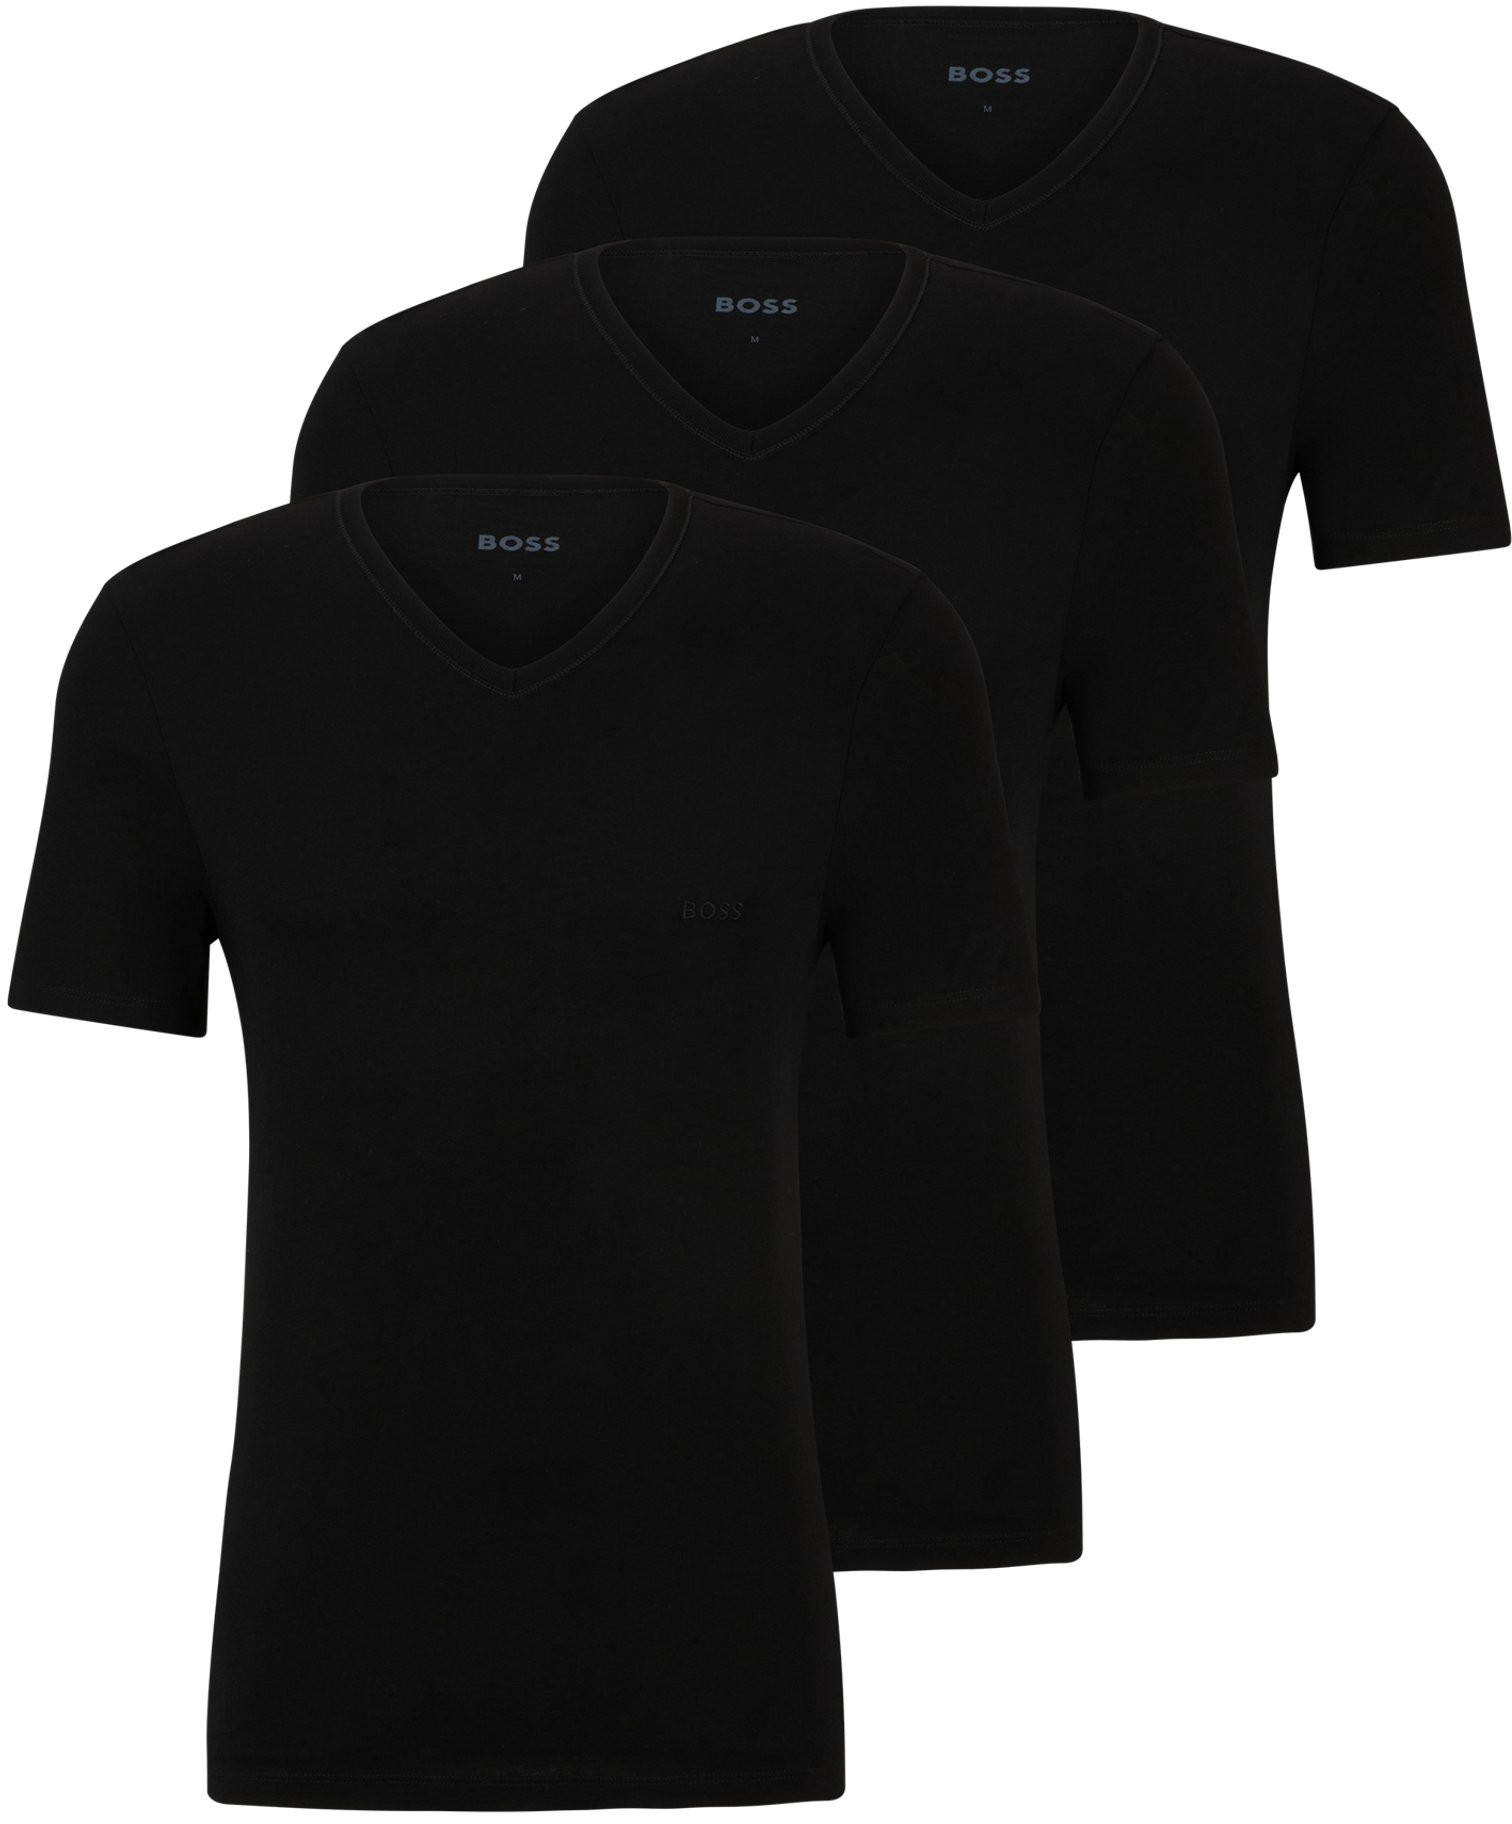 Hugo Boss 3 PACK - pánske tričko BOSS Regular Fit 50475285-001 S